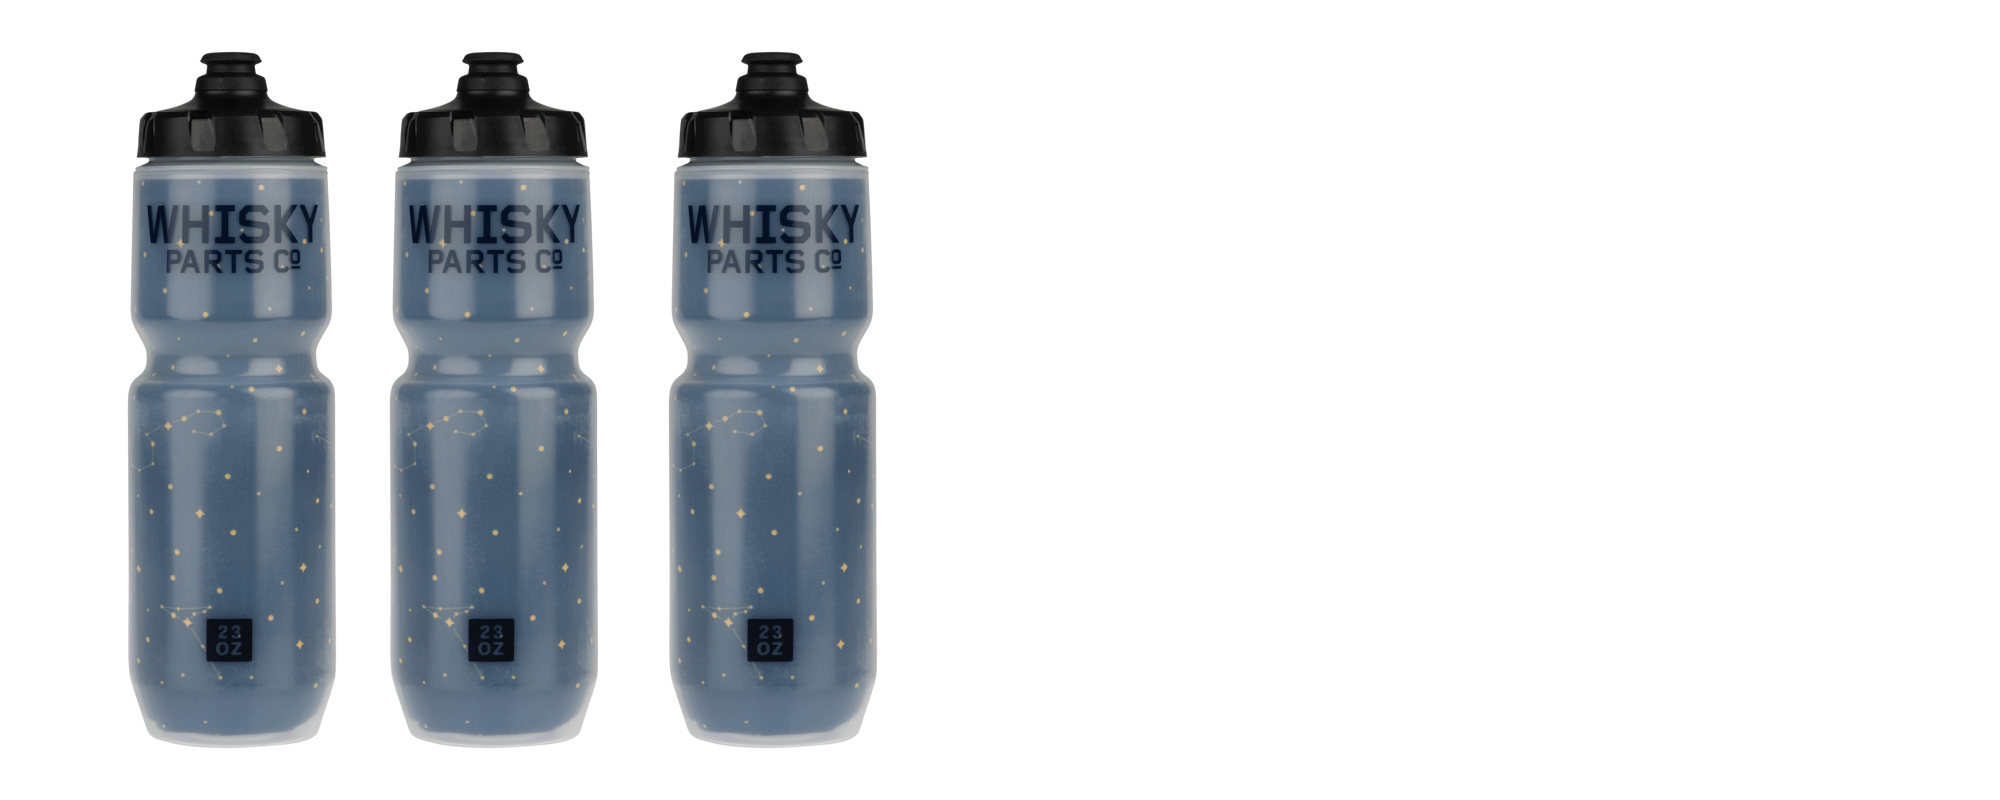 Whisky Stargazer Insulated Water Bottle - Deep Teal with Constellation Design - three bottles shown